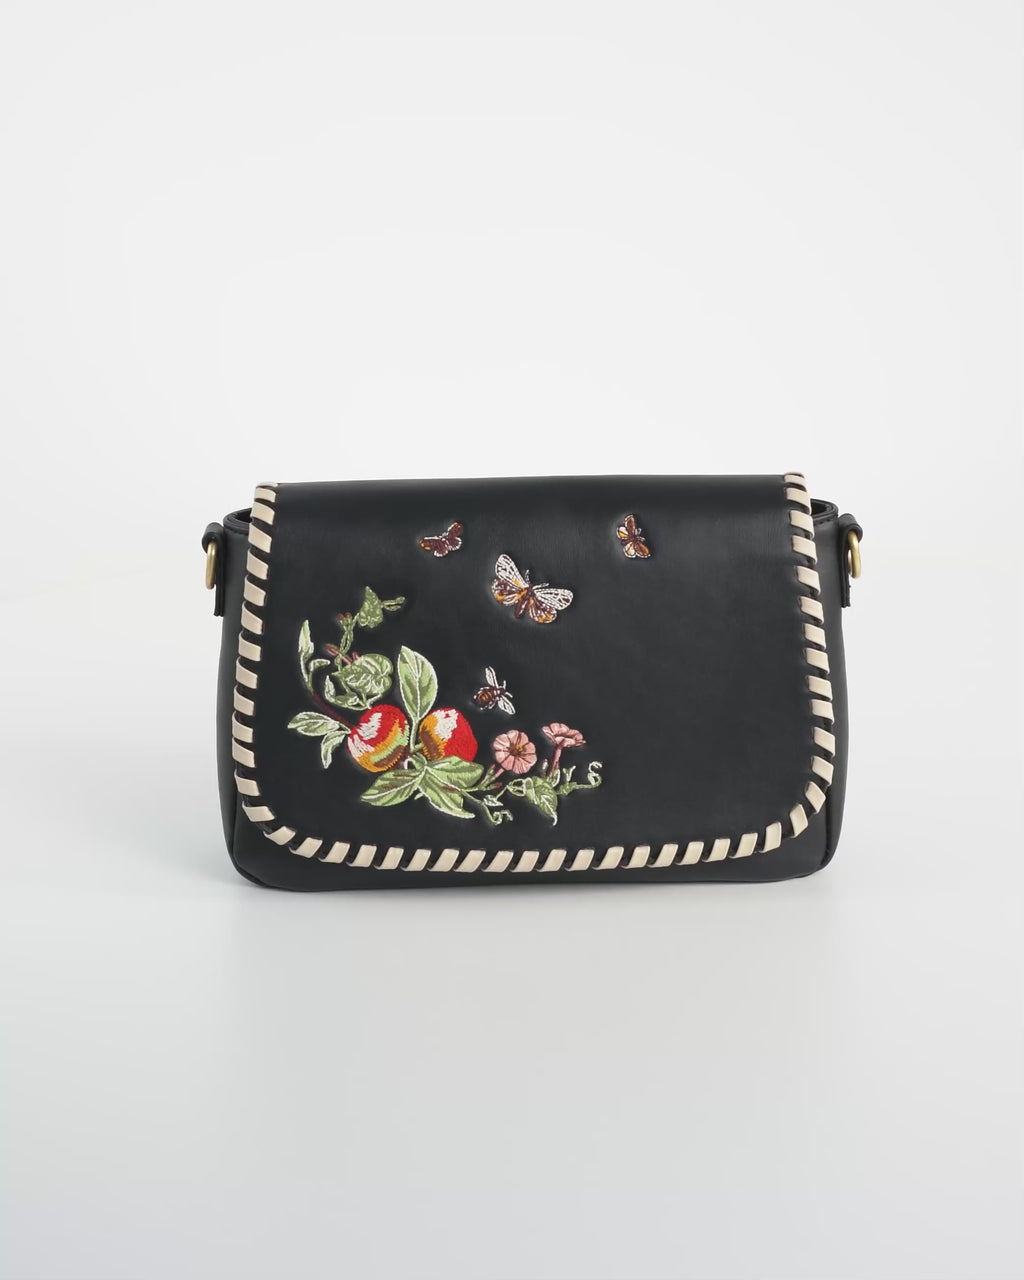 Apple Leather Handbag - Black by Fable England